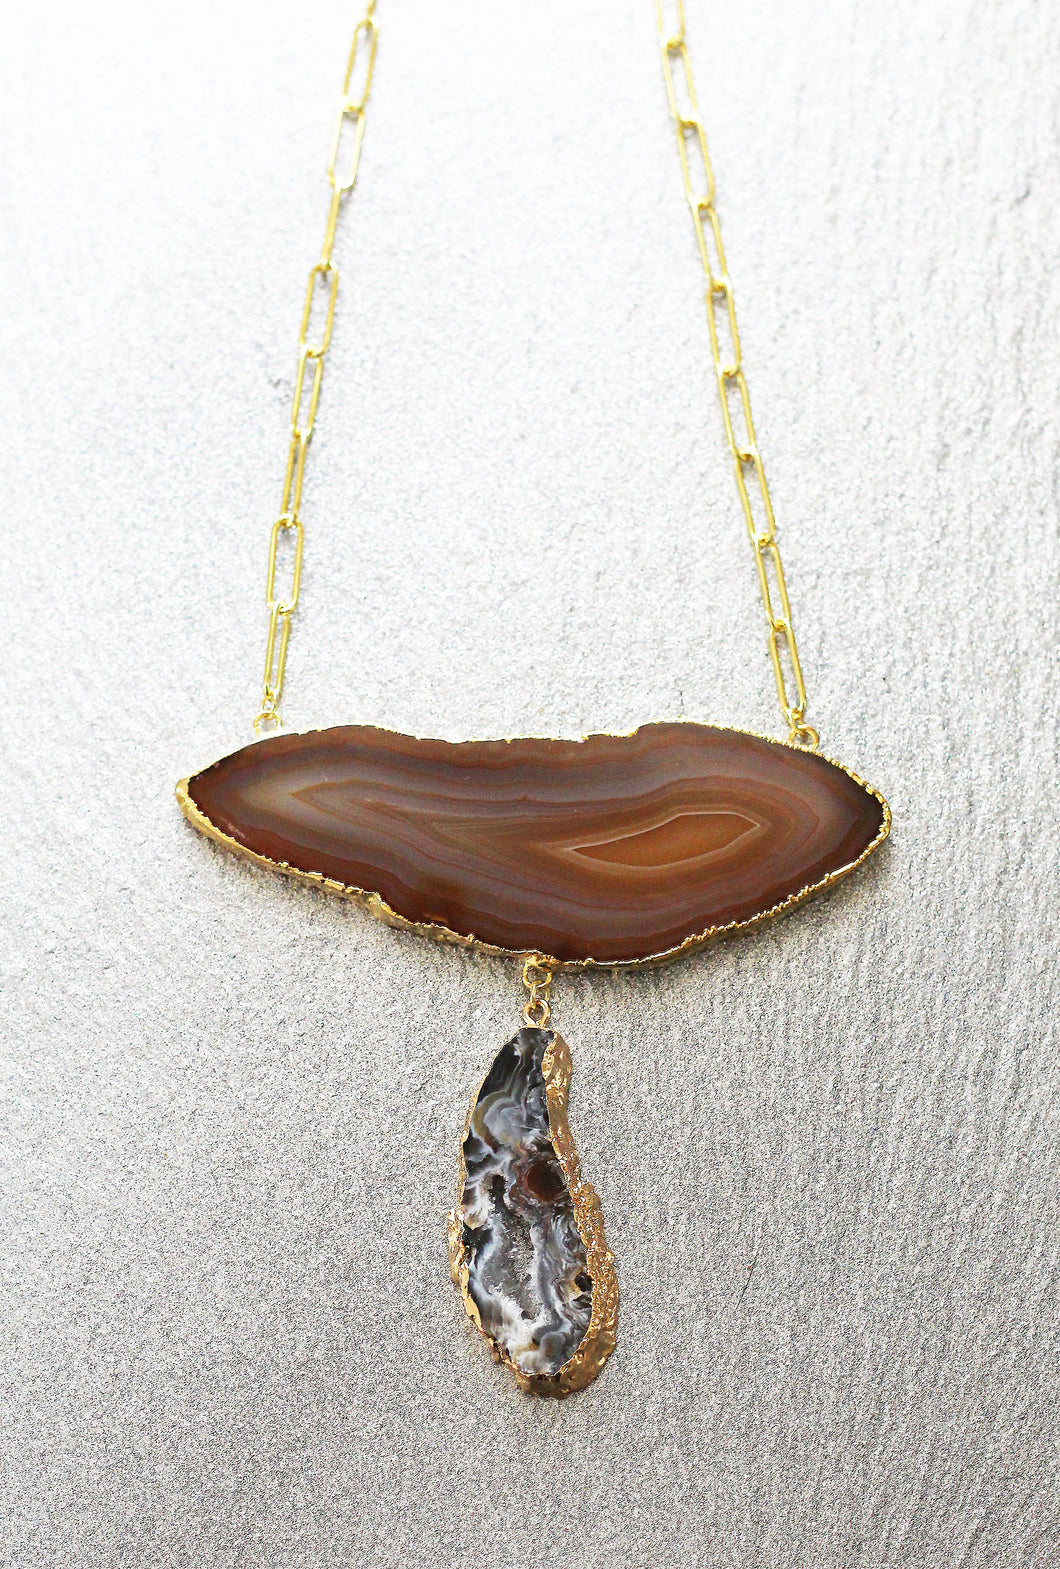 brown-geode-necklace